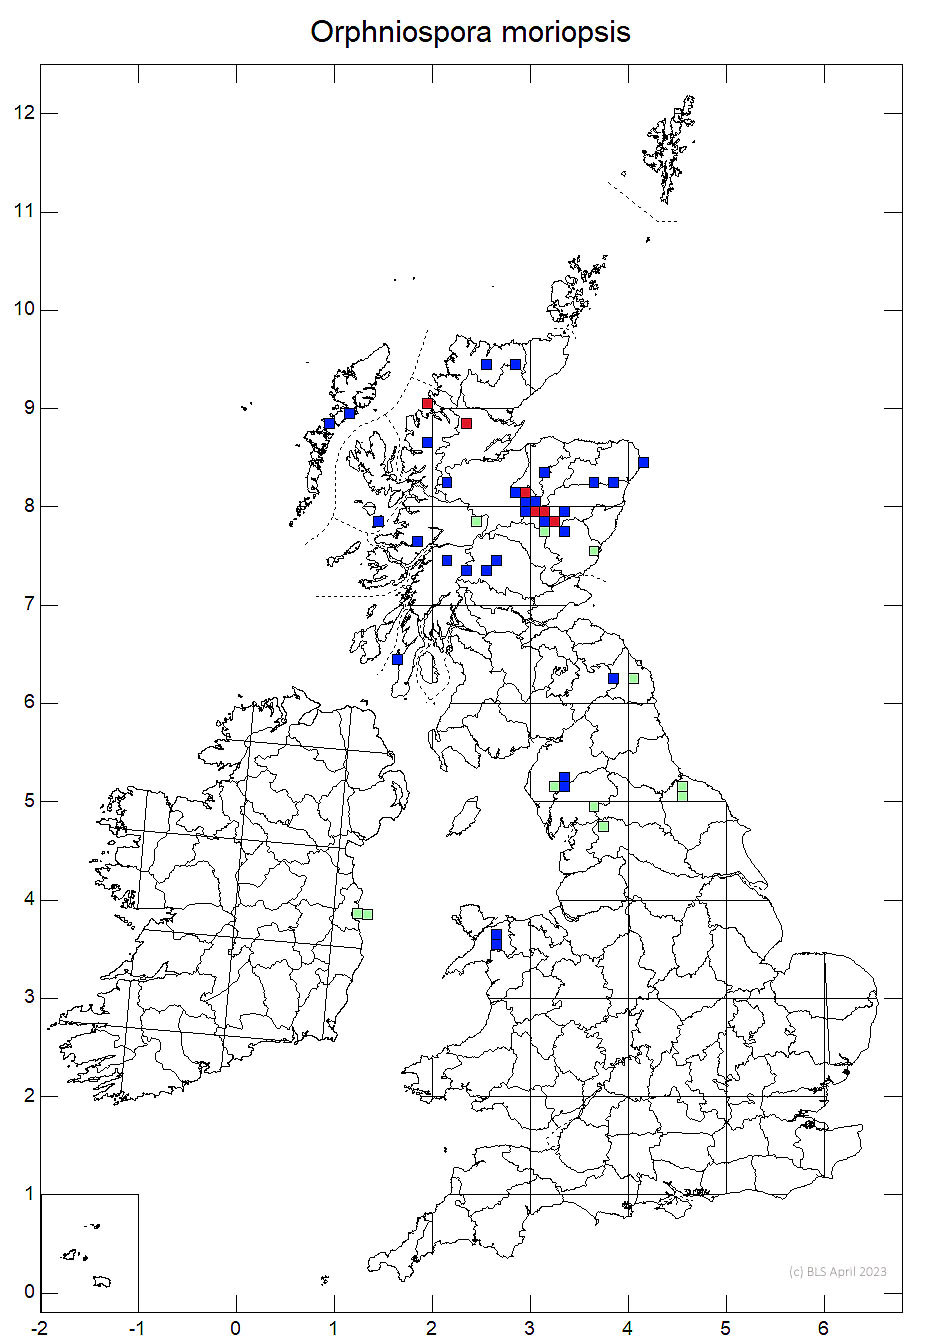 Orphniospora moriopsis var. moriopsis 10km sq distribution map